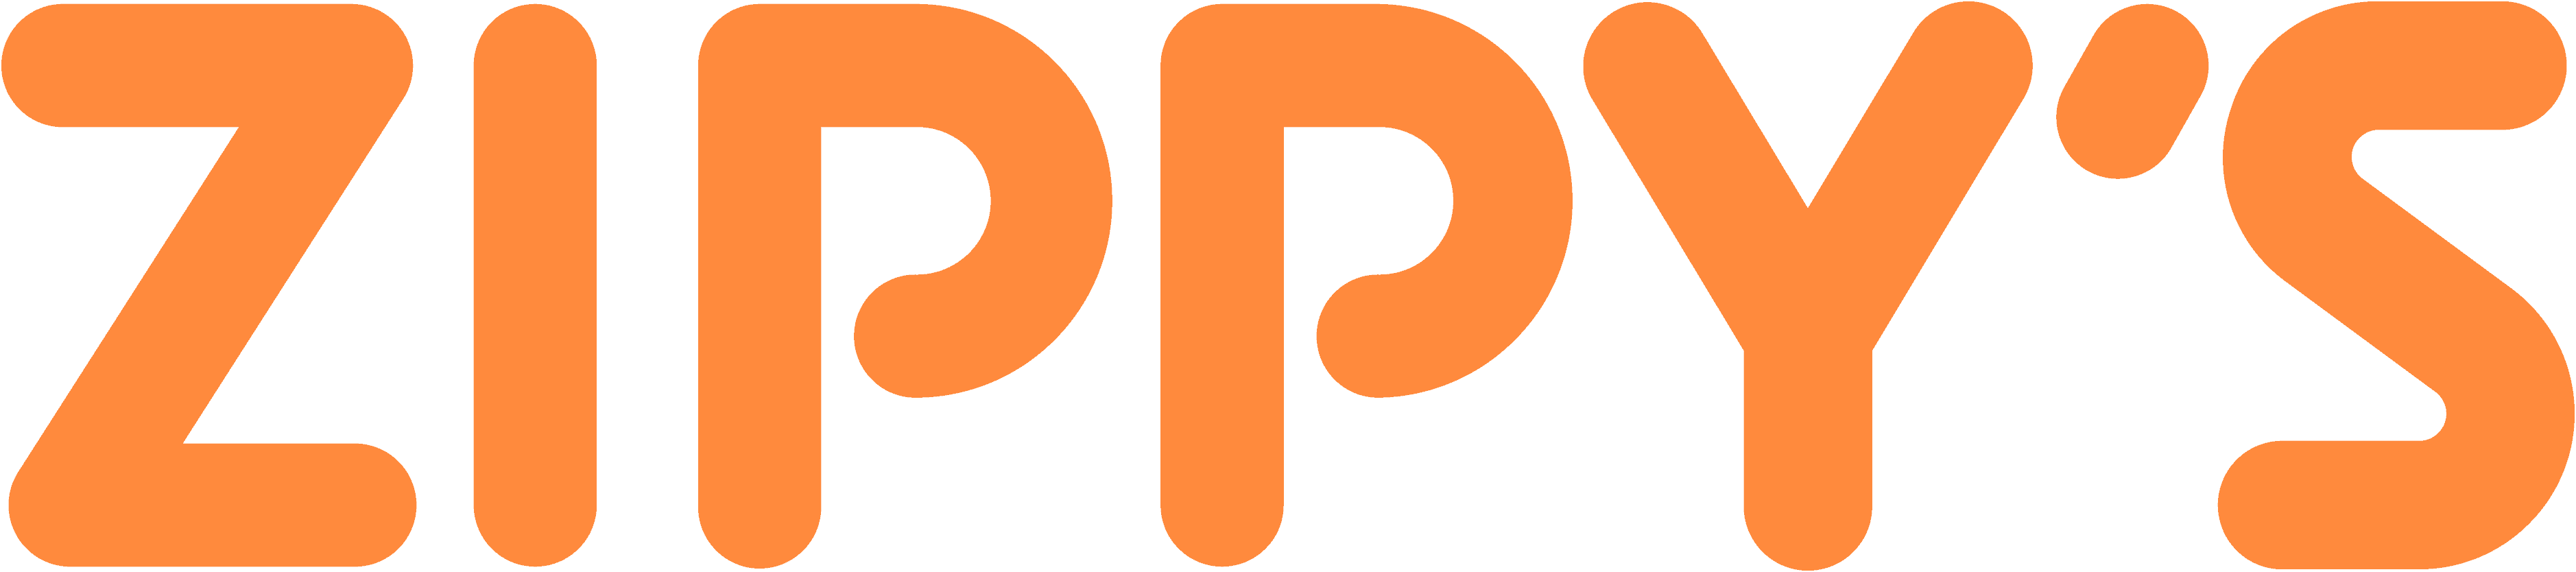 Zippy's logo